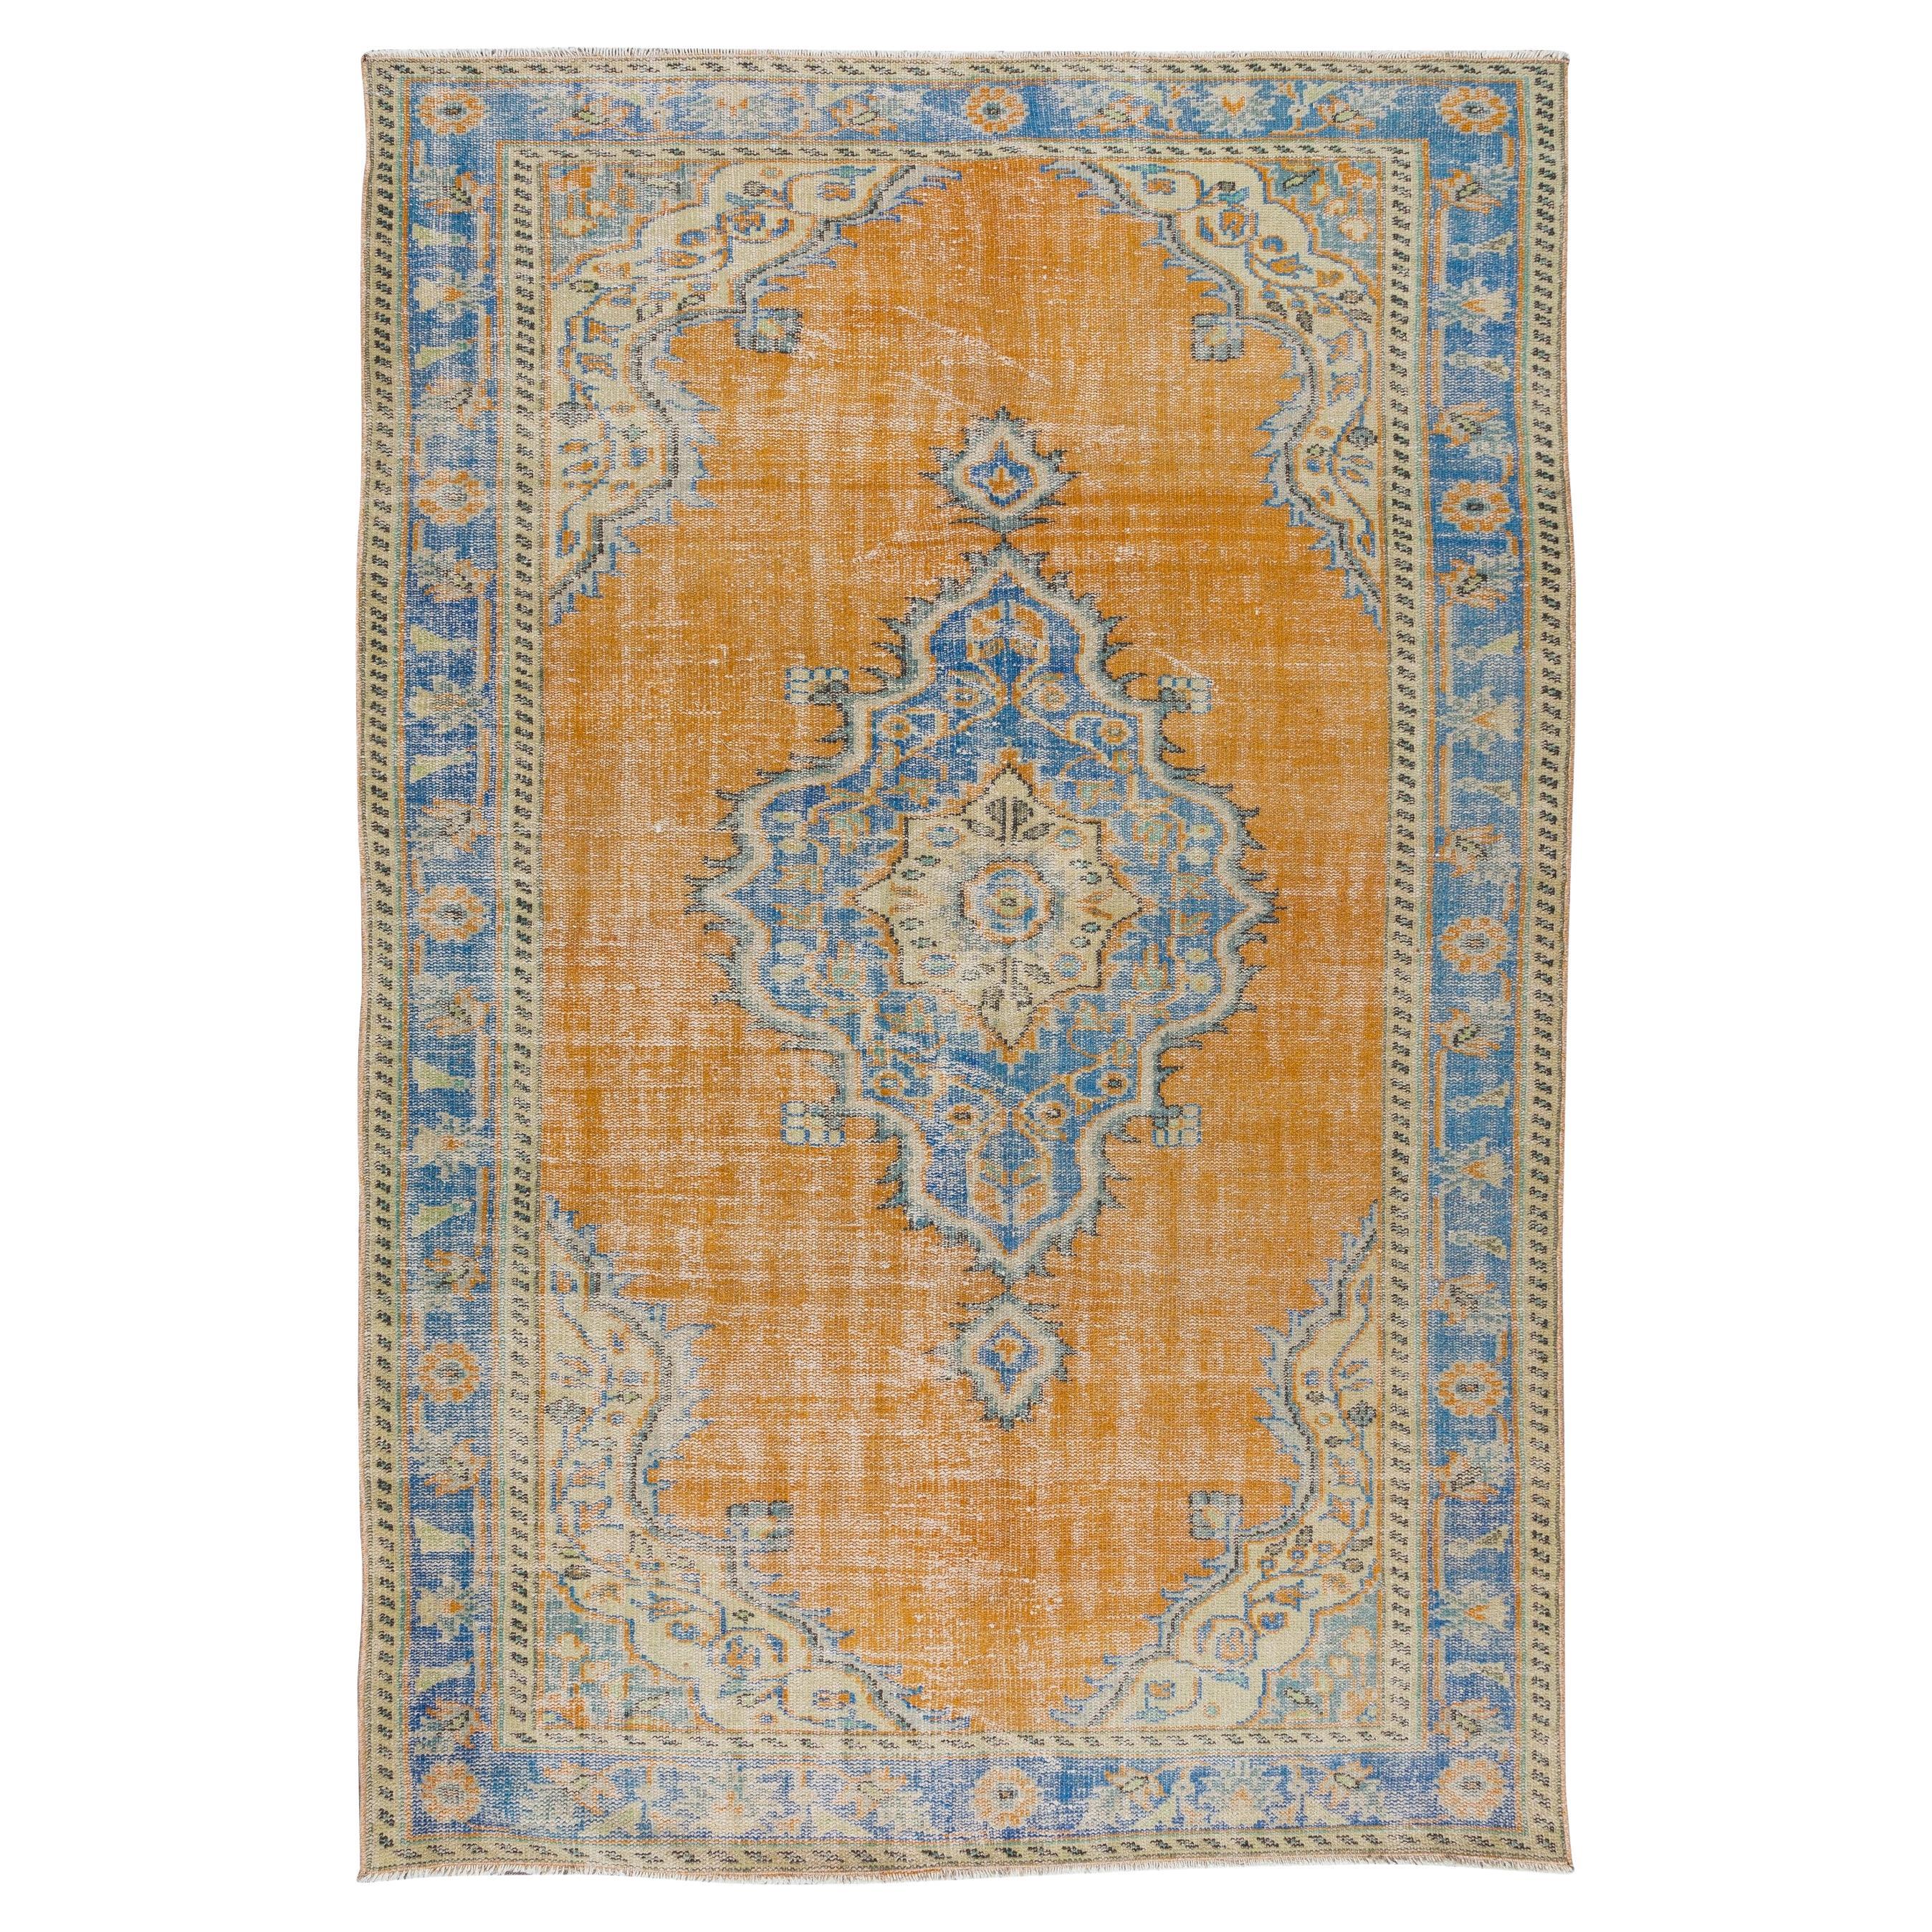 6x9 Ft Handmade Turkish Rug, 1960s Medallion Design Carpet in Orange & Navy Blue